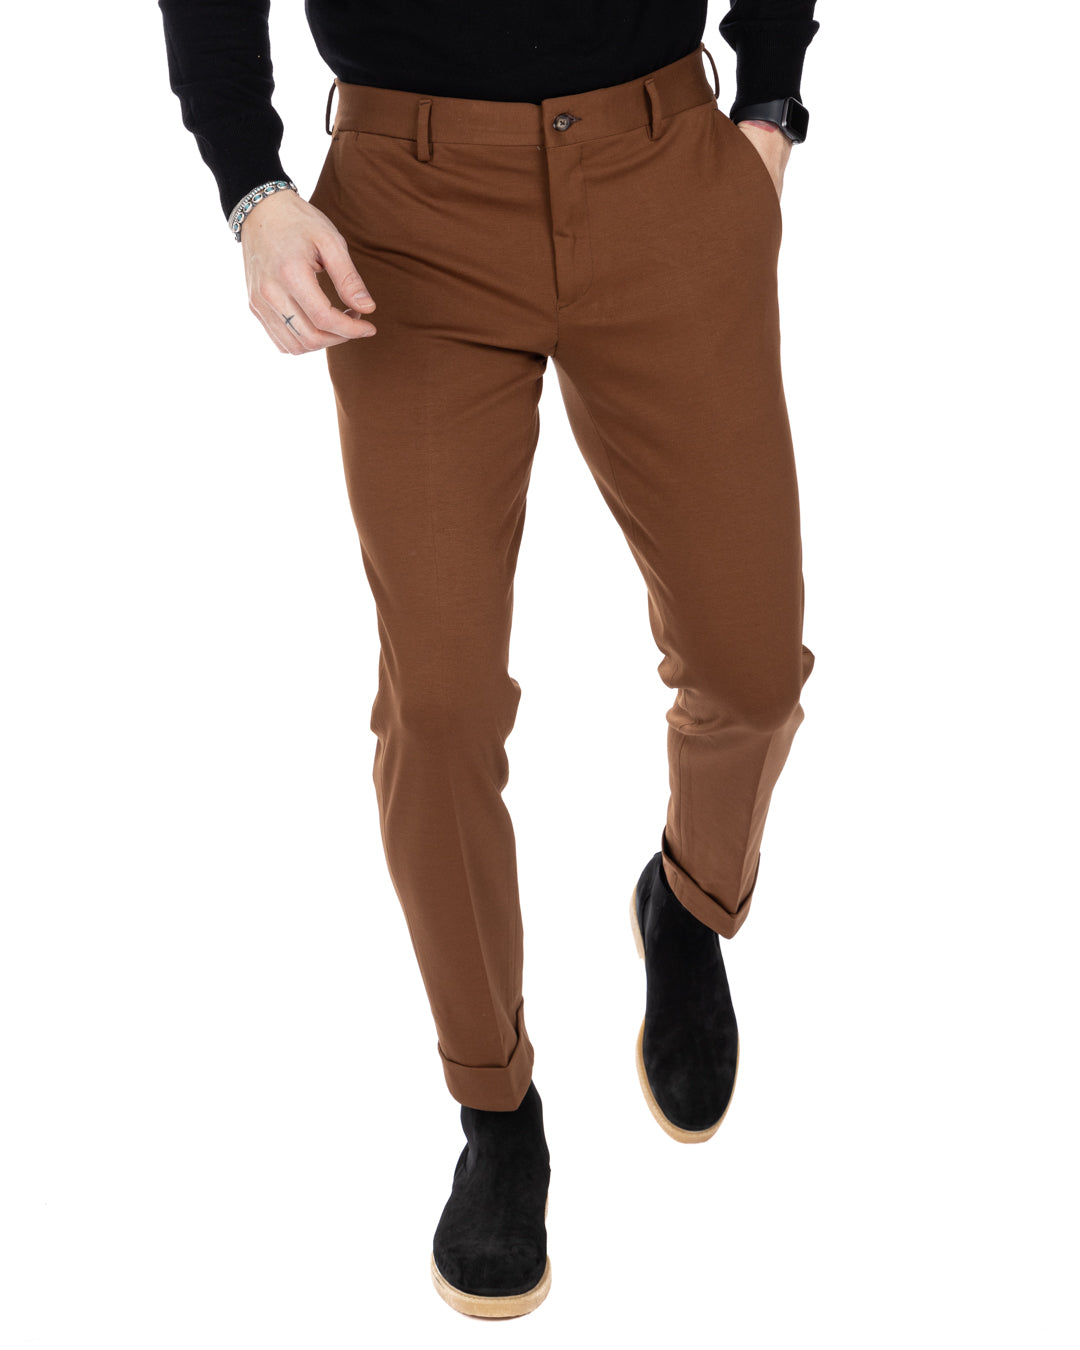 Altamura - pantalon marron classique